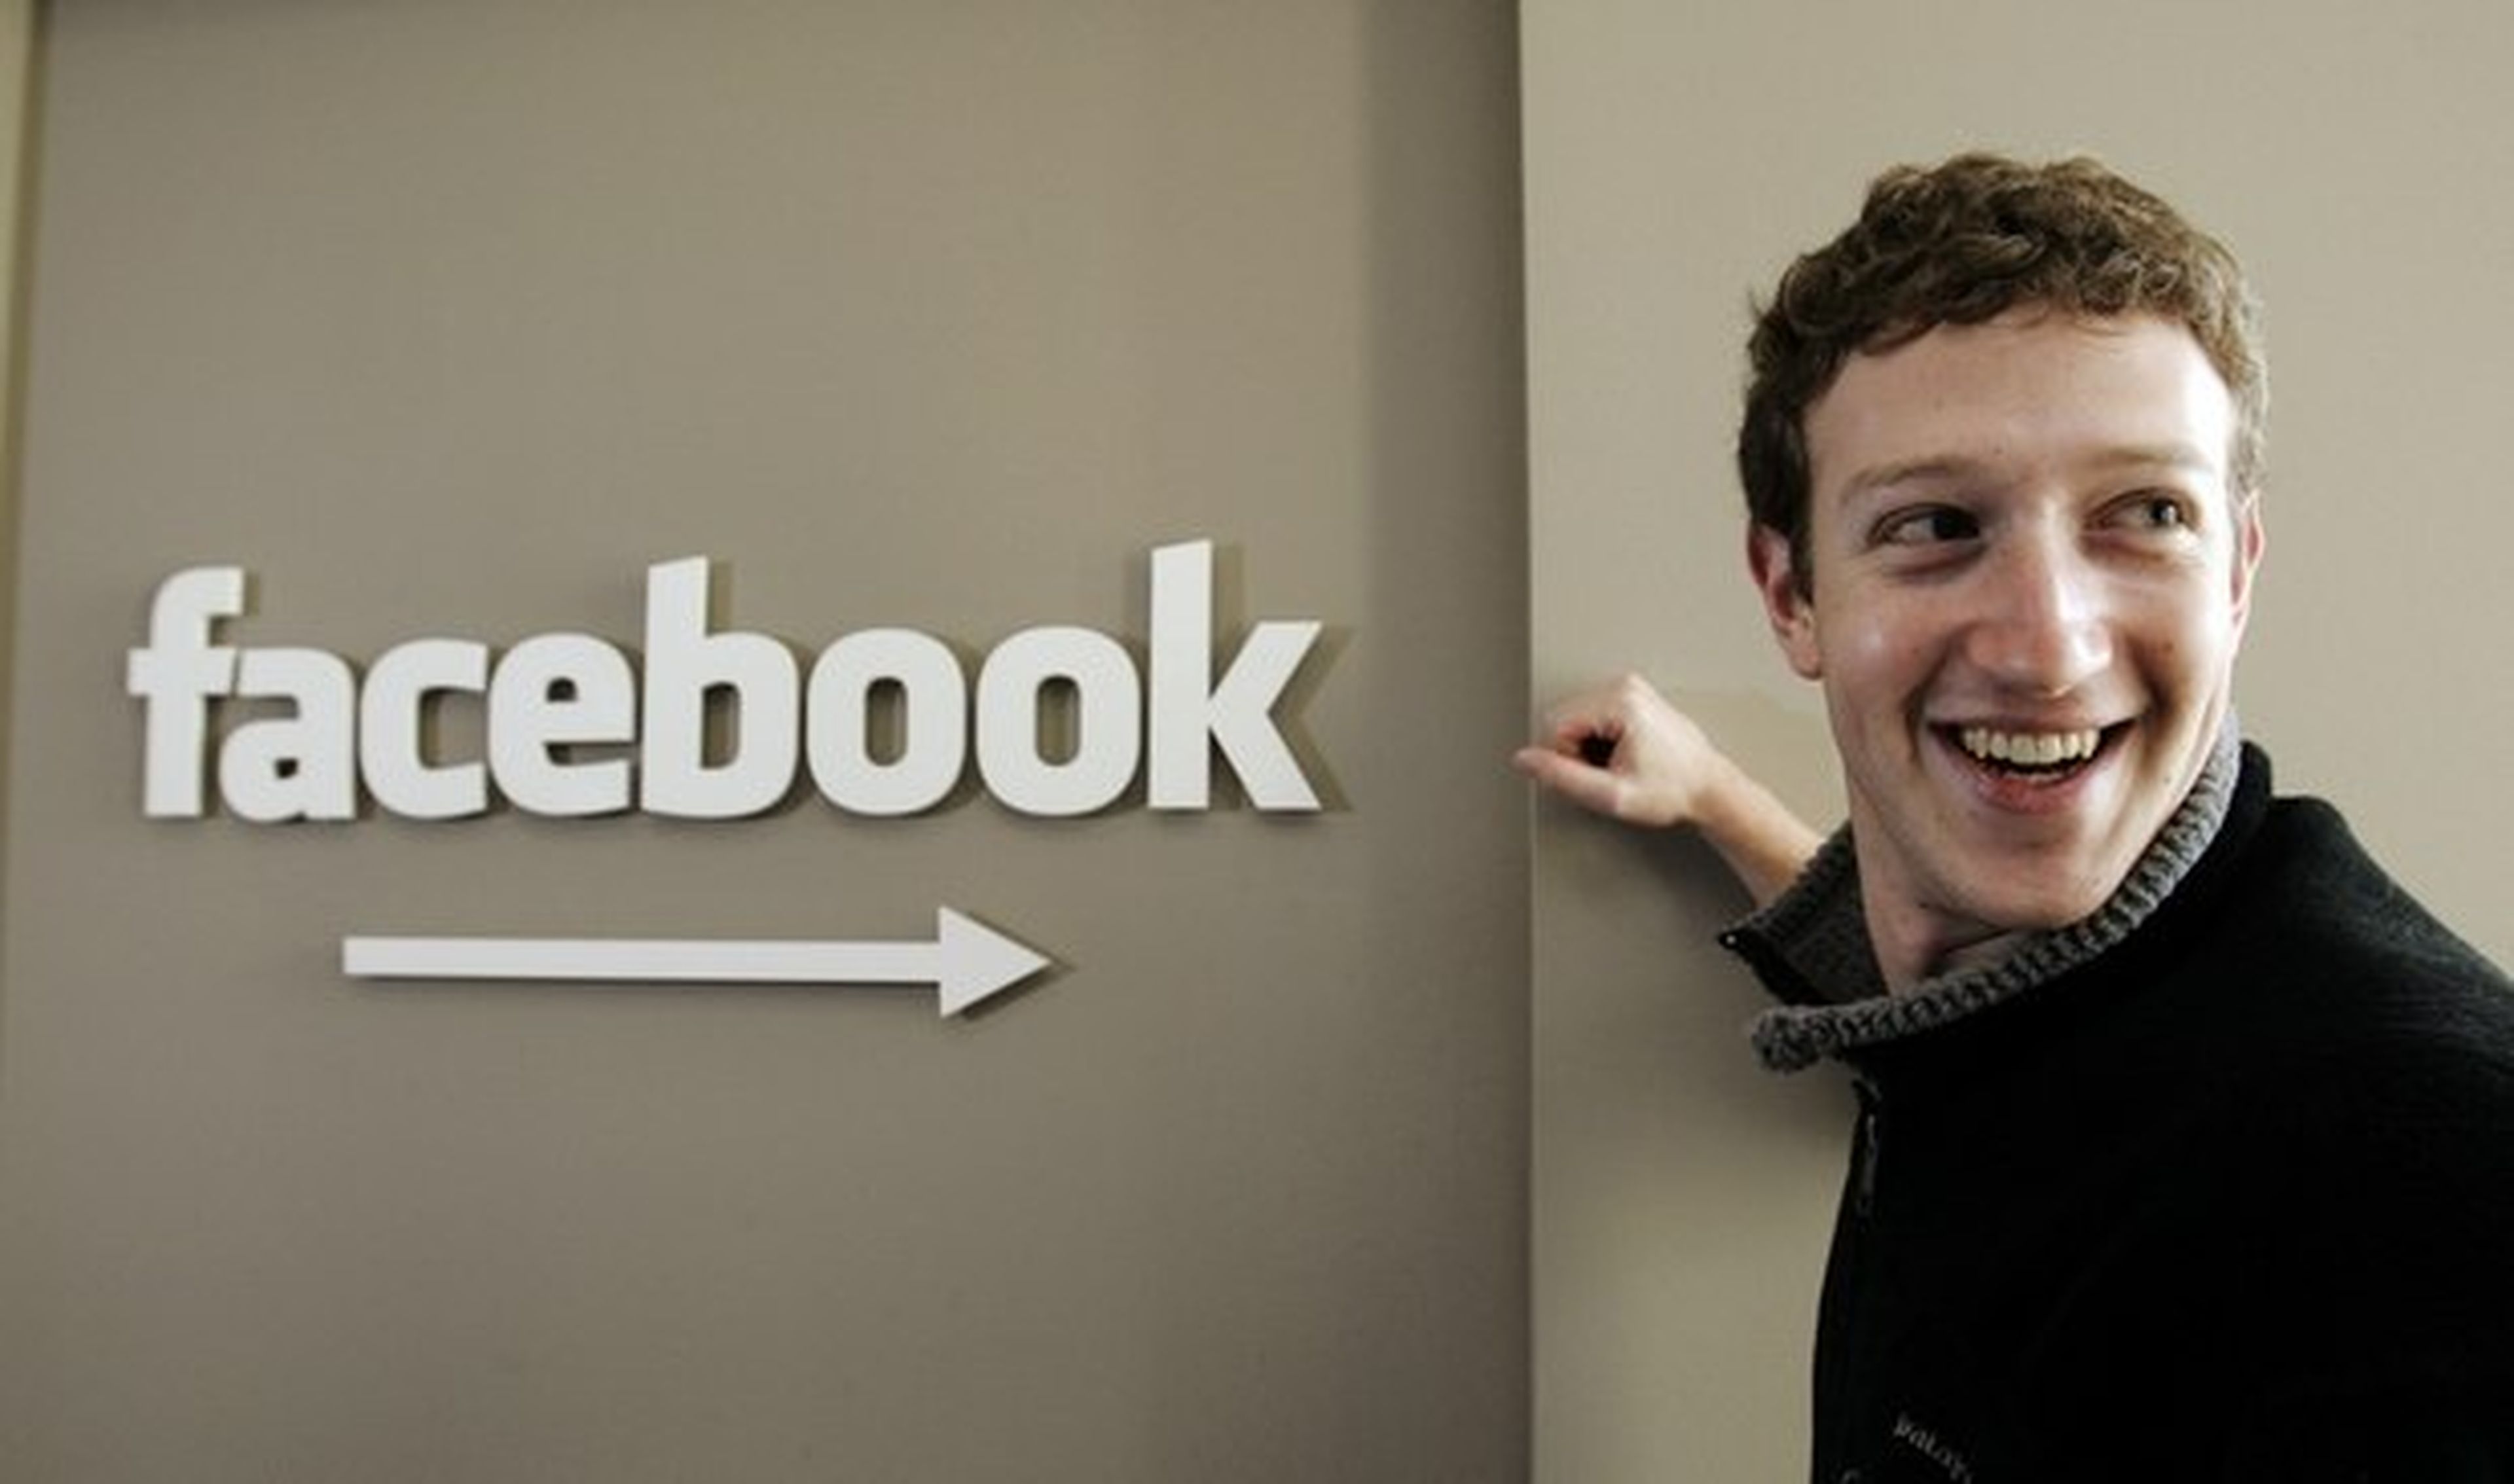 Las excentricidades de Mark Zuckerberg. Foto: Finance News 24